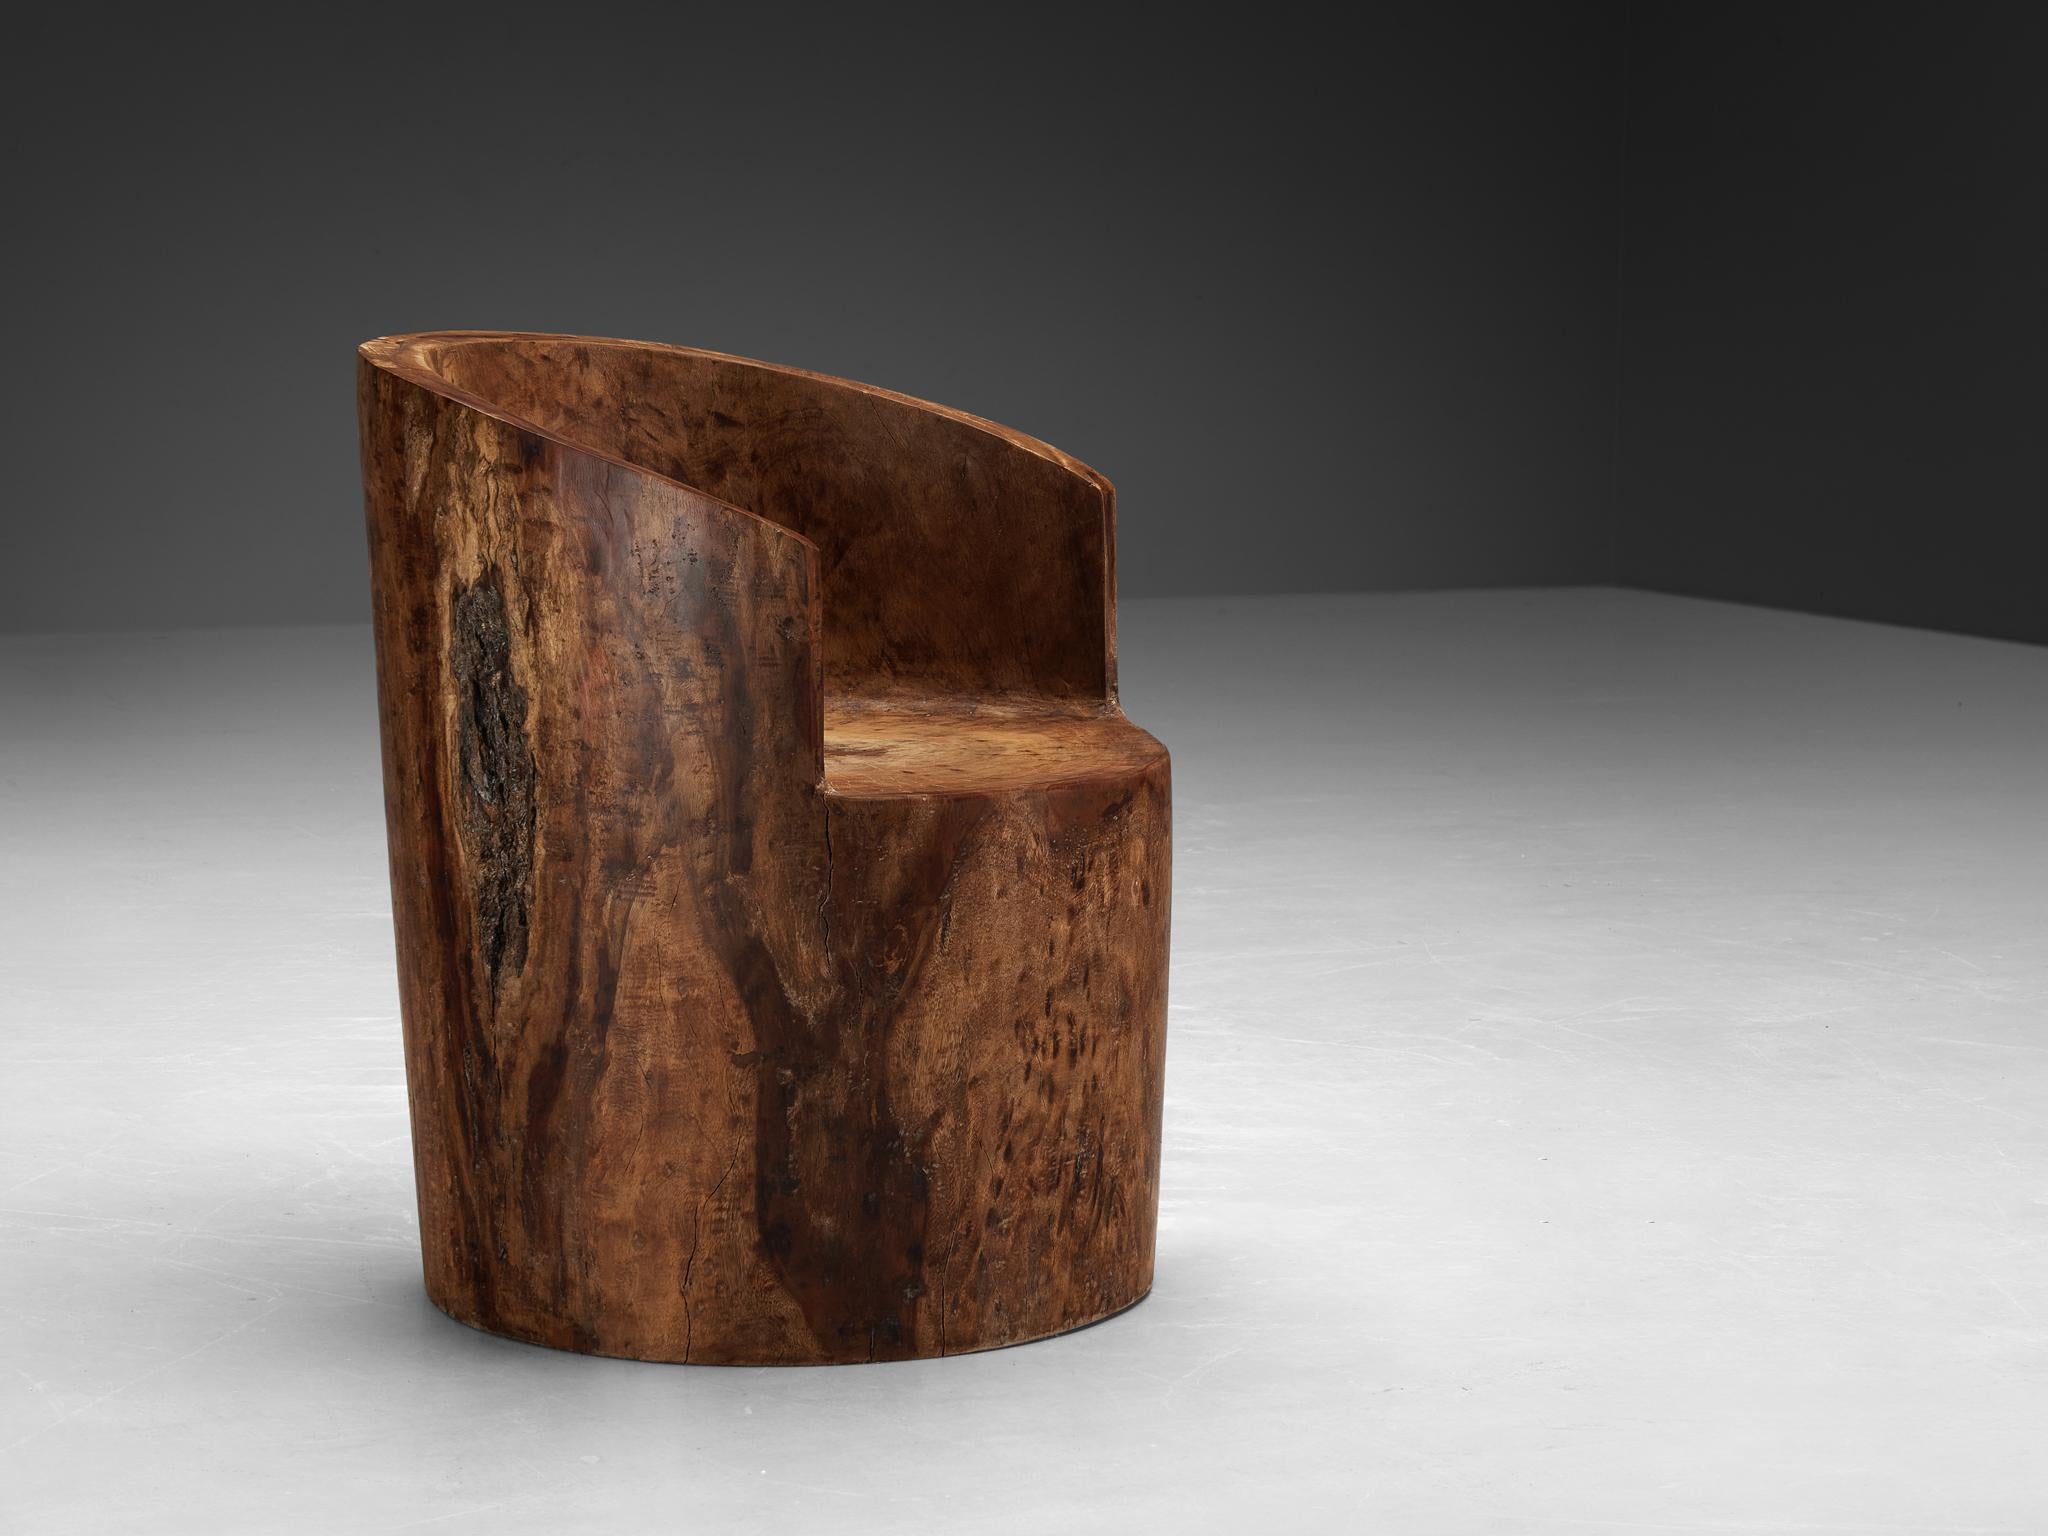 José Zanine Caldas Hand-Carved ‘Pilão’ Chair in Brazilian Hardwood